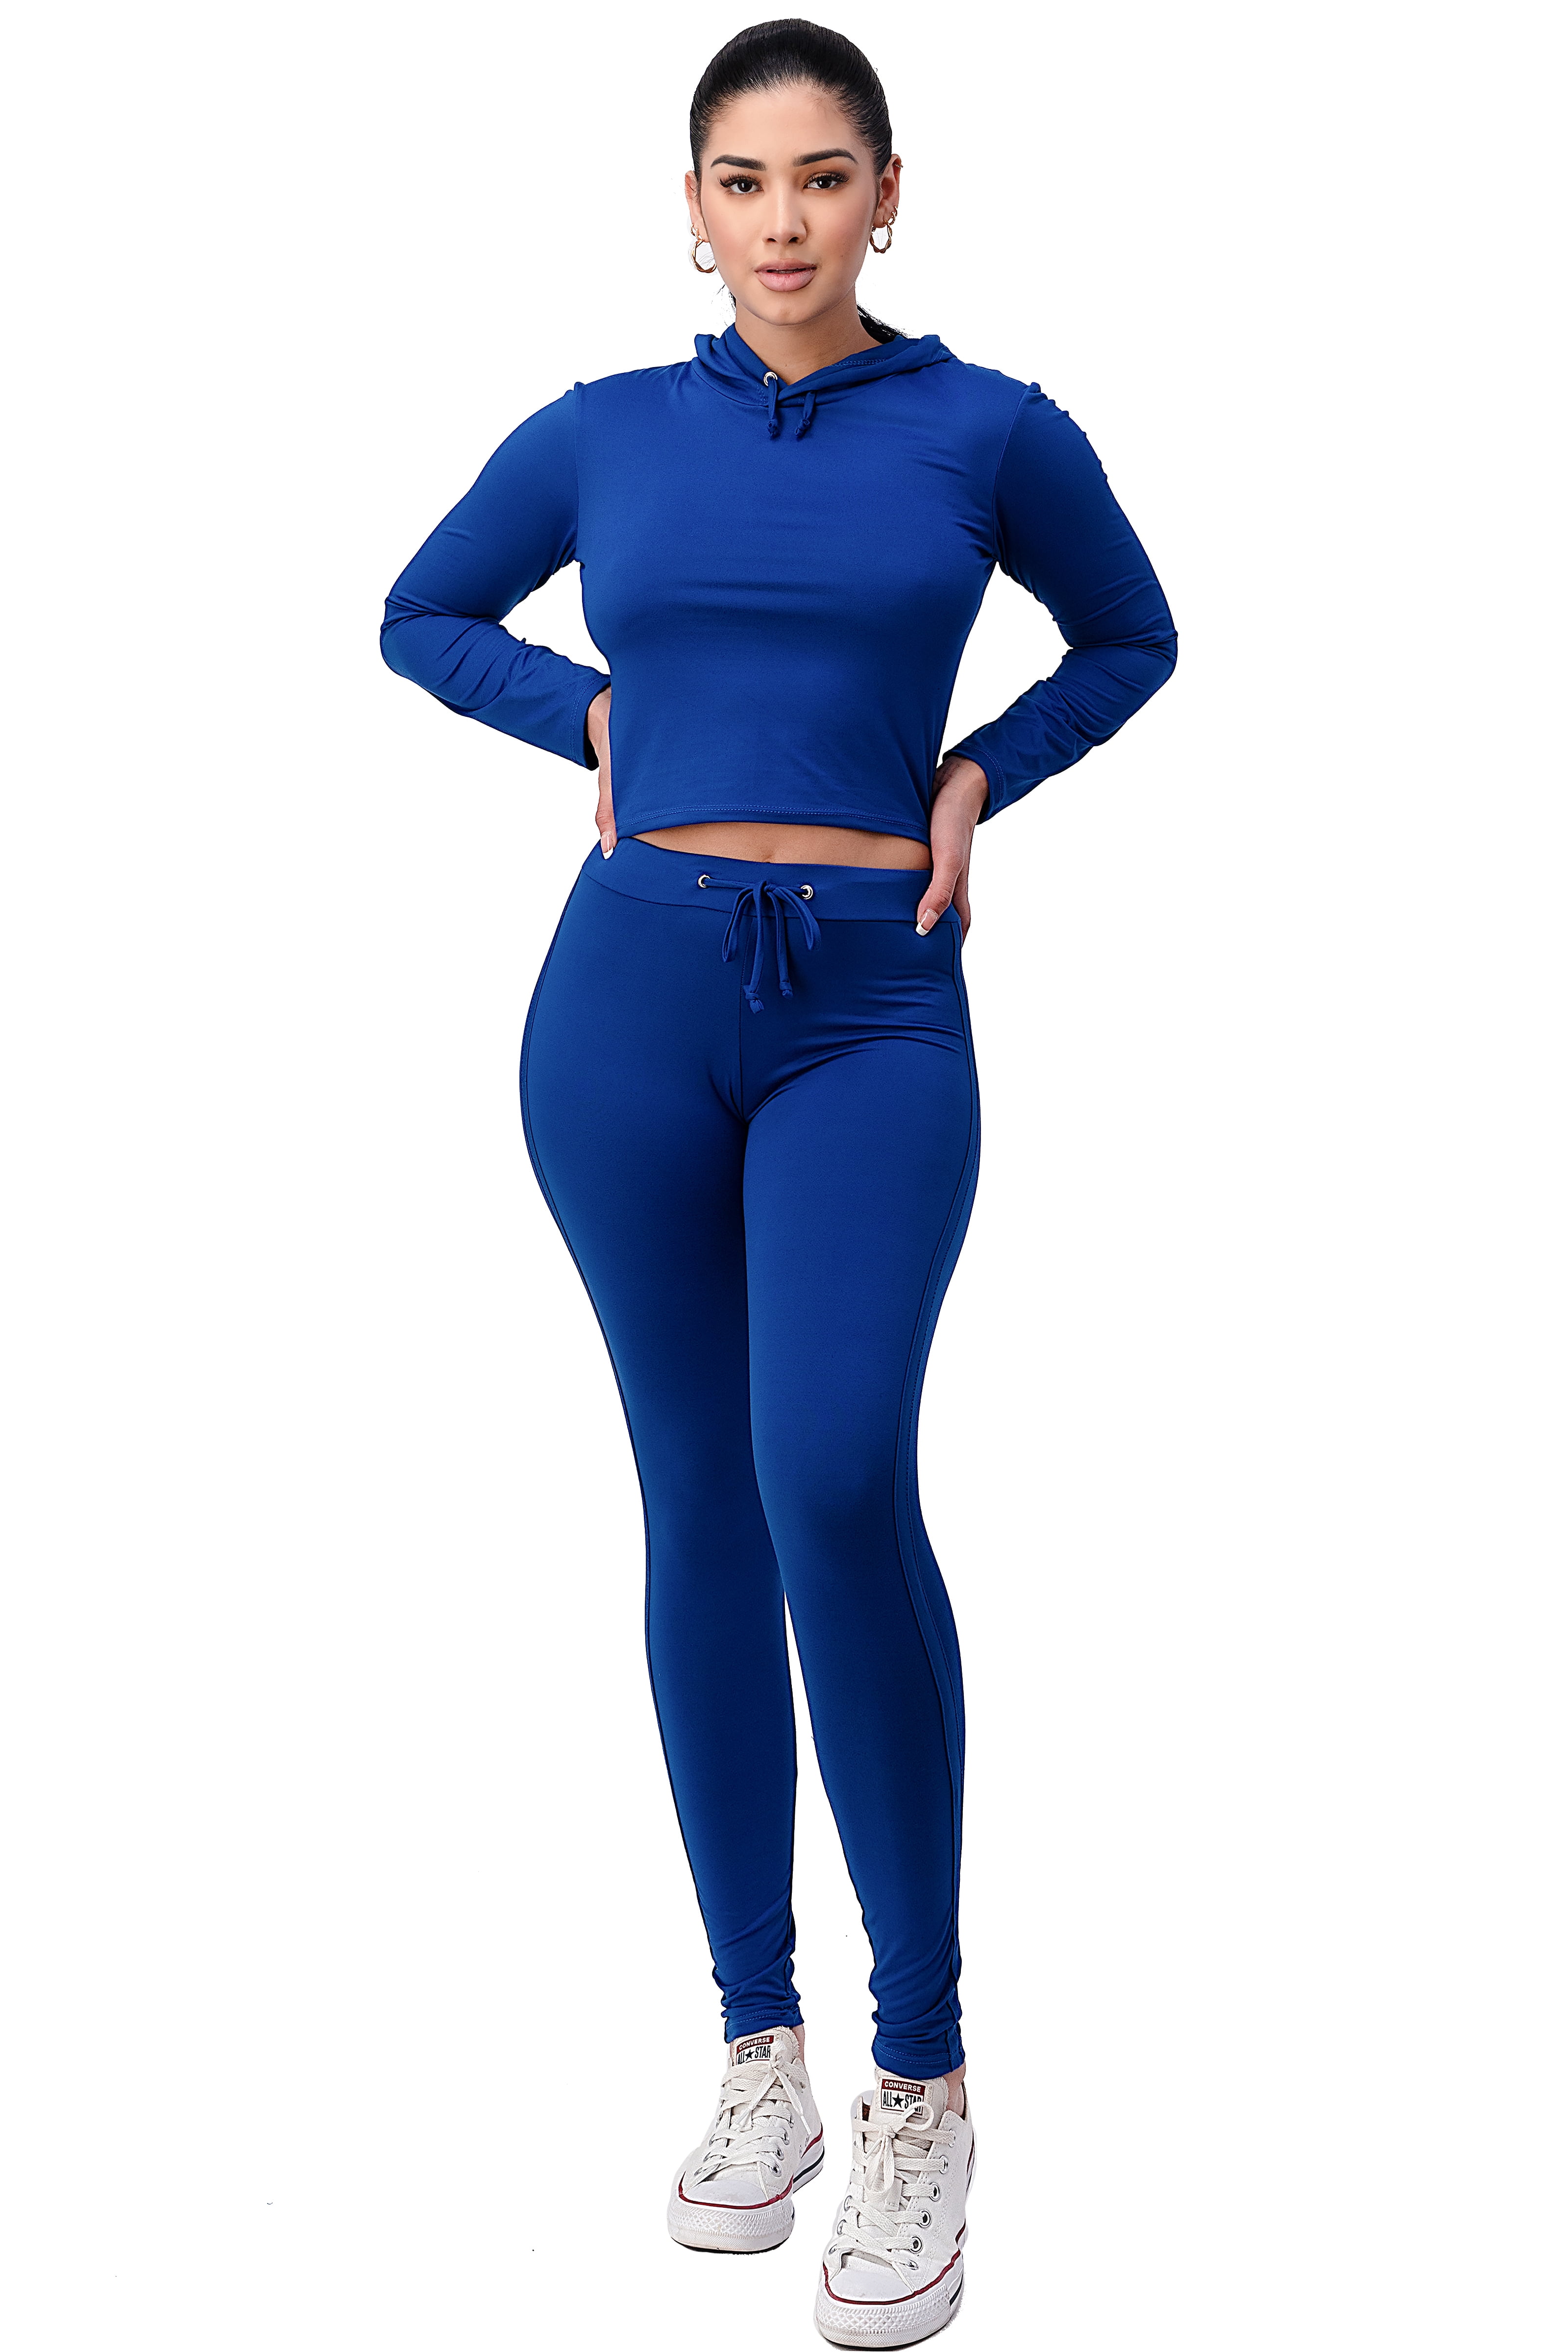 Women's Blue Camo Capri Leggings (Pair them with our matching Top) | eBay-hanic.com.vn